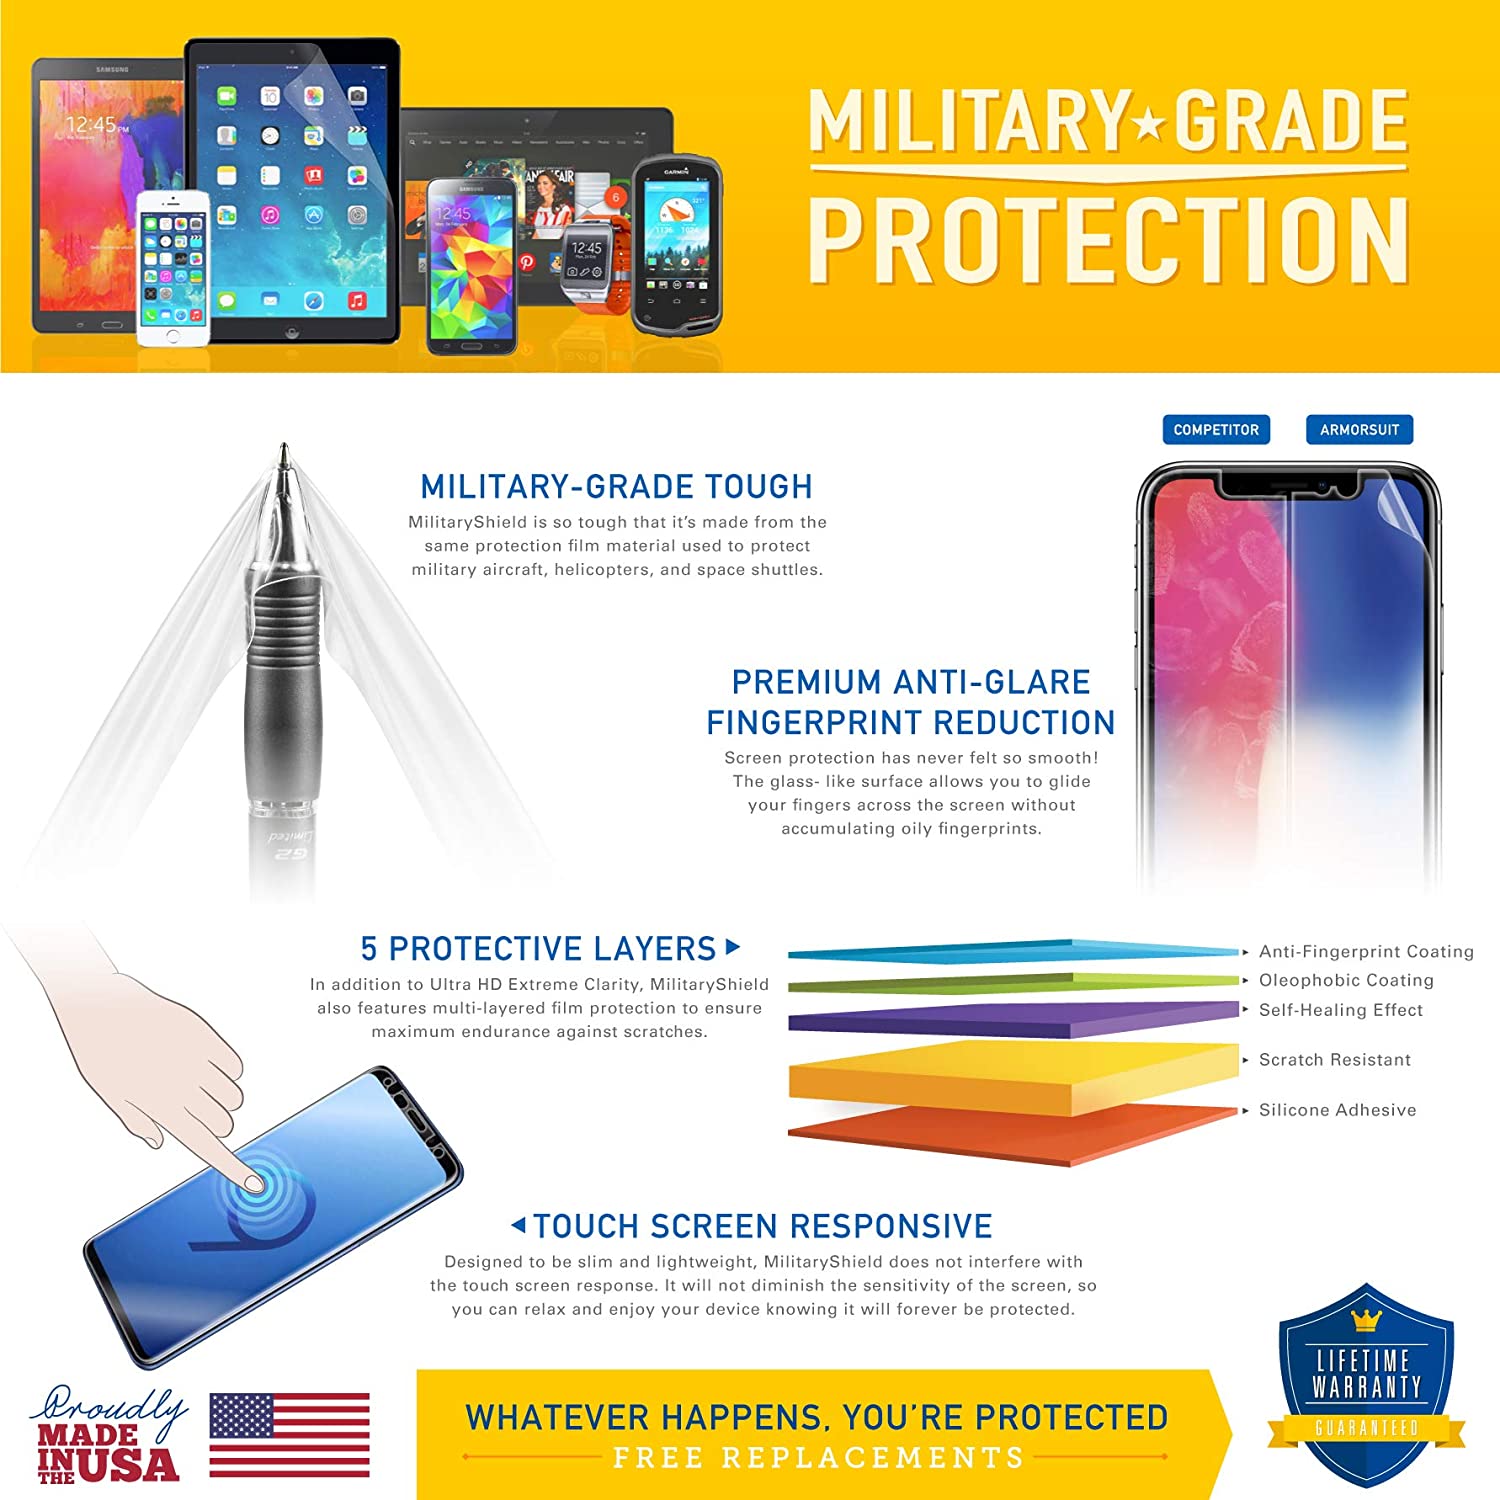 [2 Pack] LG Optimus Exceed 2 Screen Protector